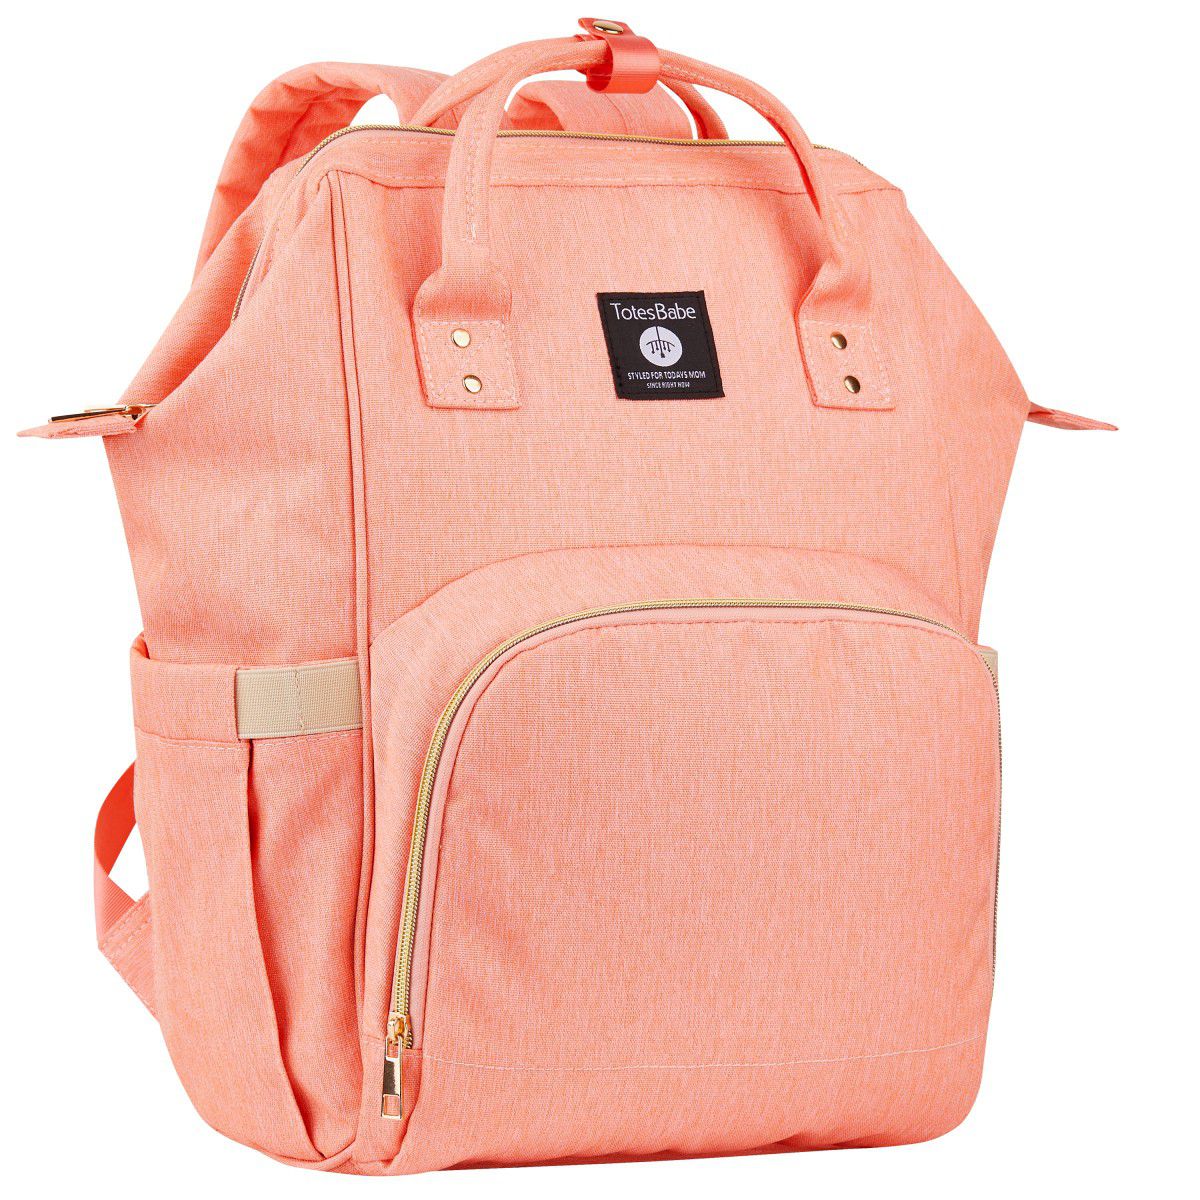 Totes Babe Alma 18L Diaper Backpack - Peach